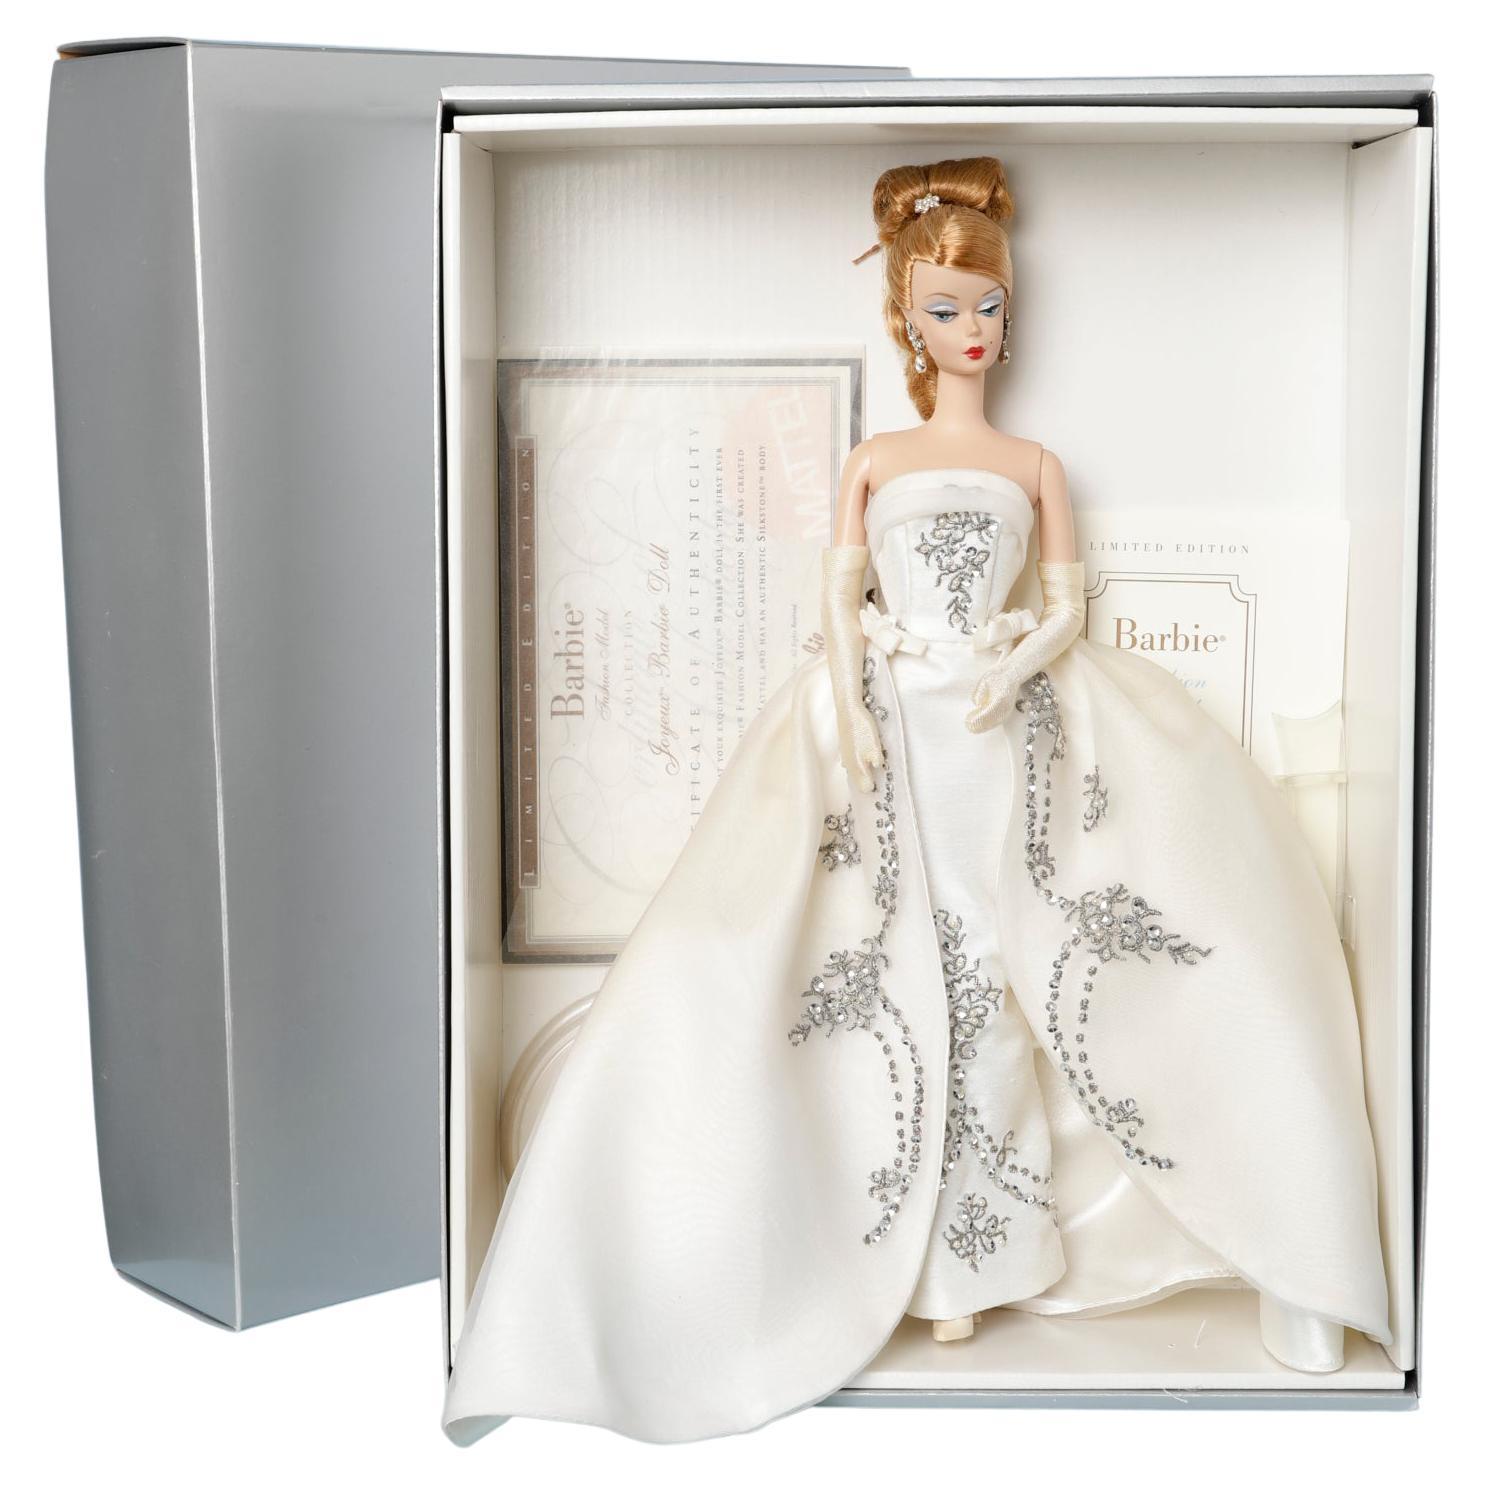 Barbie Fashion Model / "Joyeux" / Limited Edition For Sale